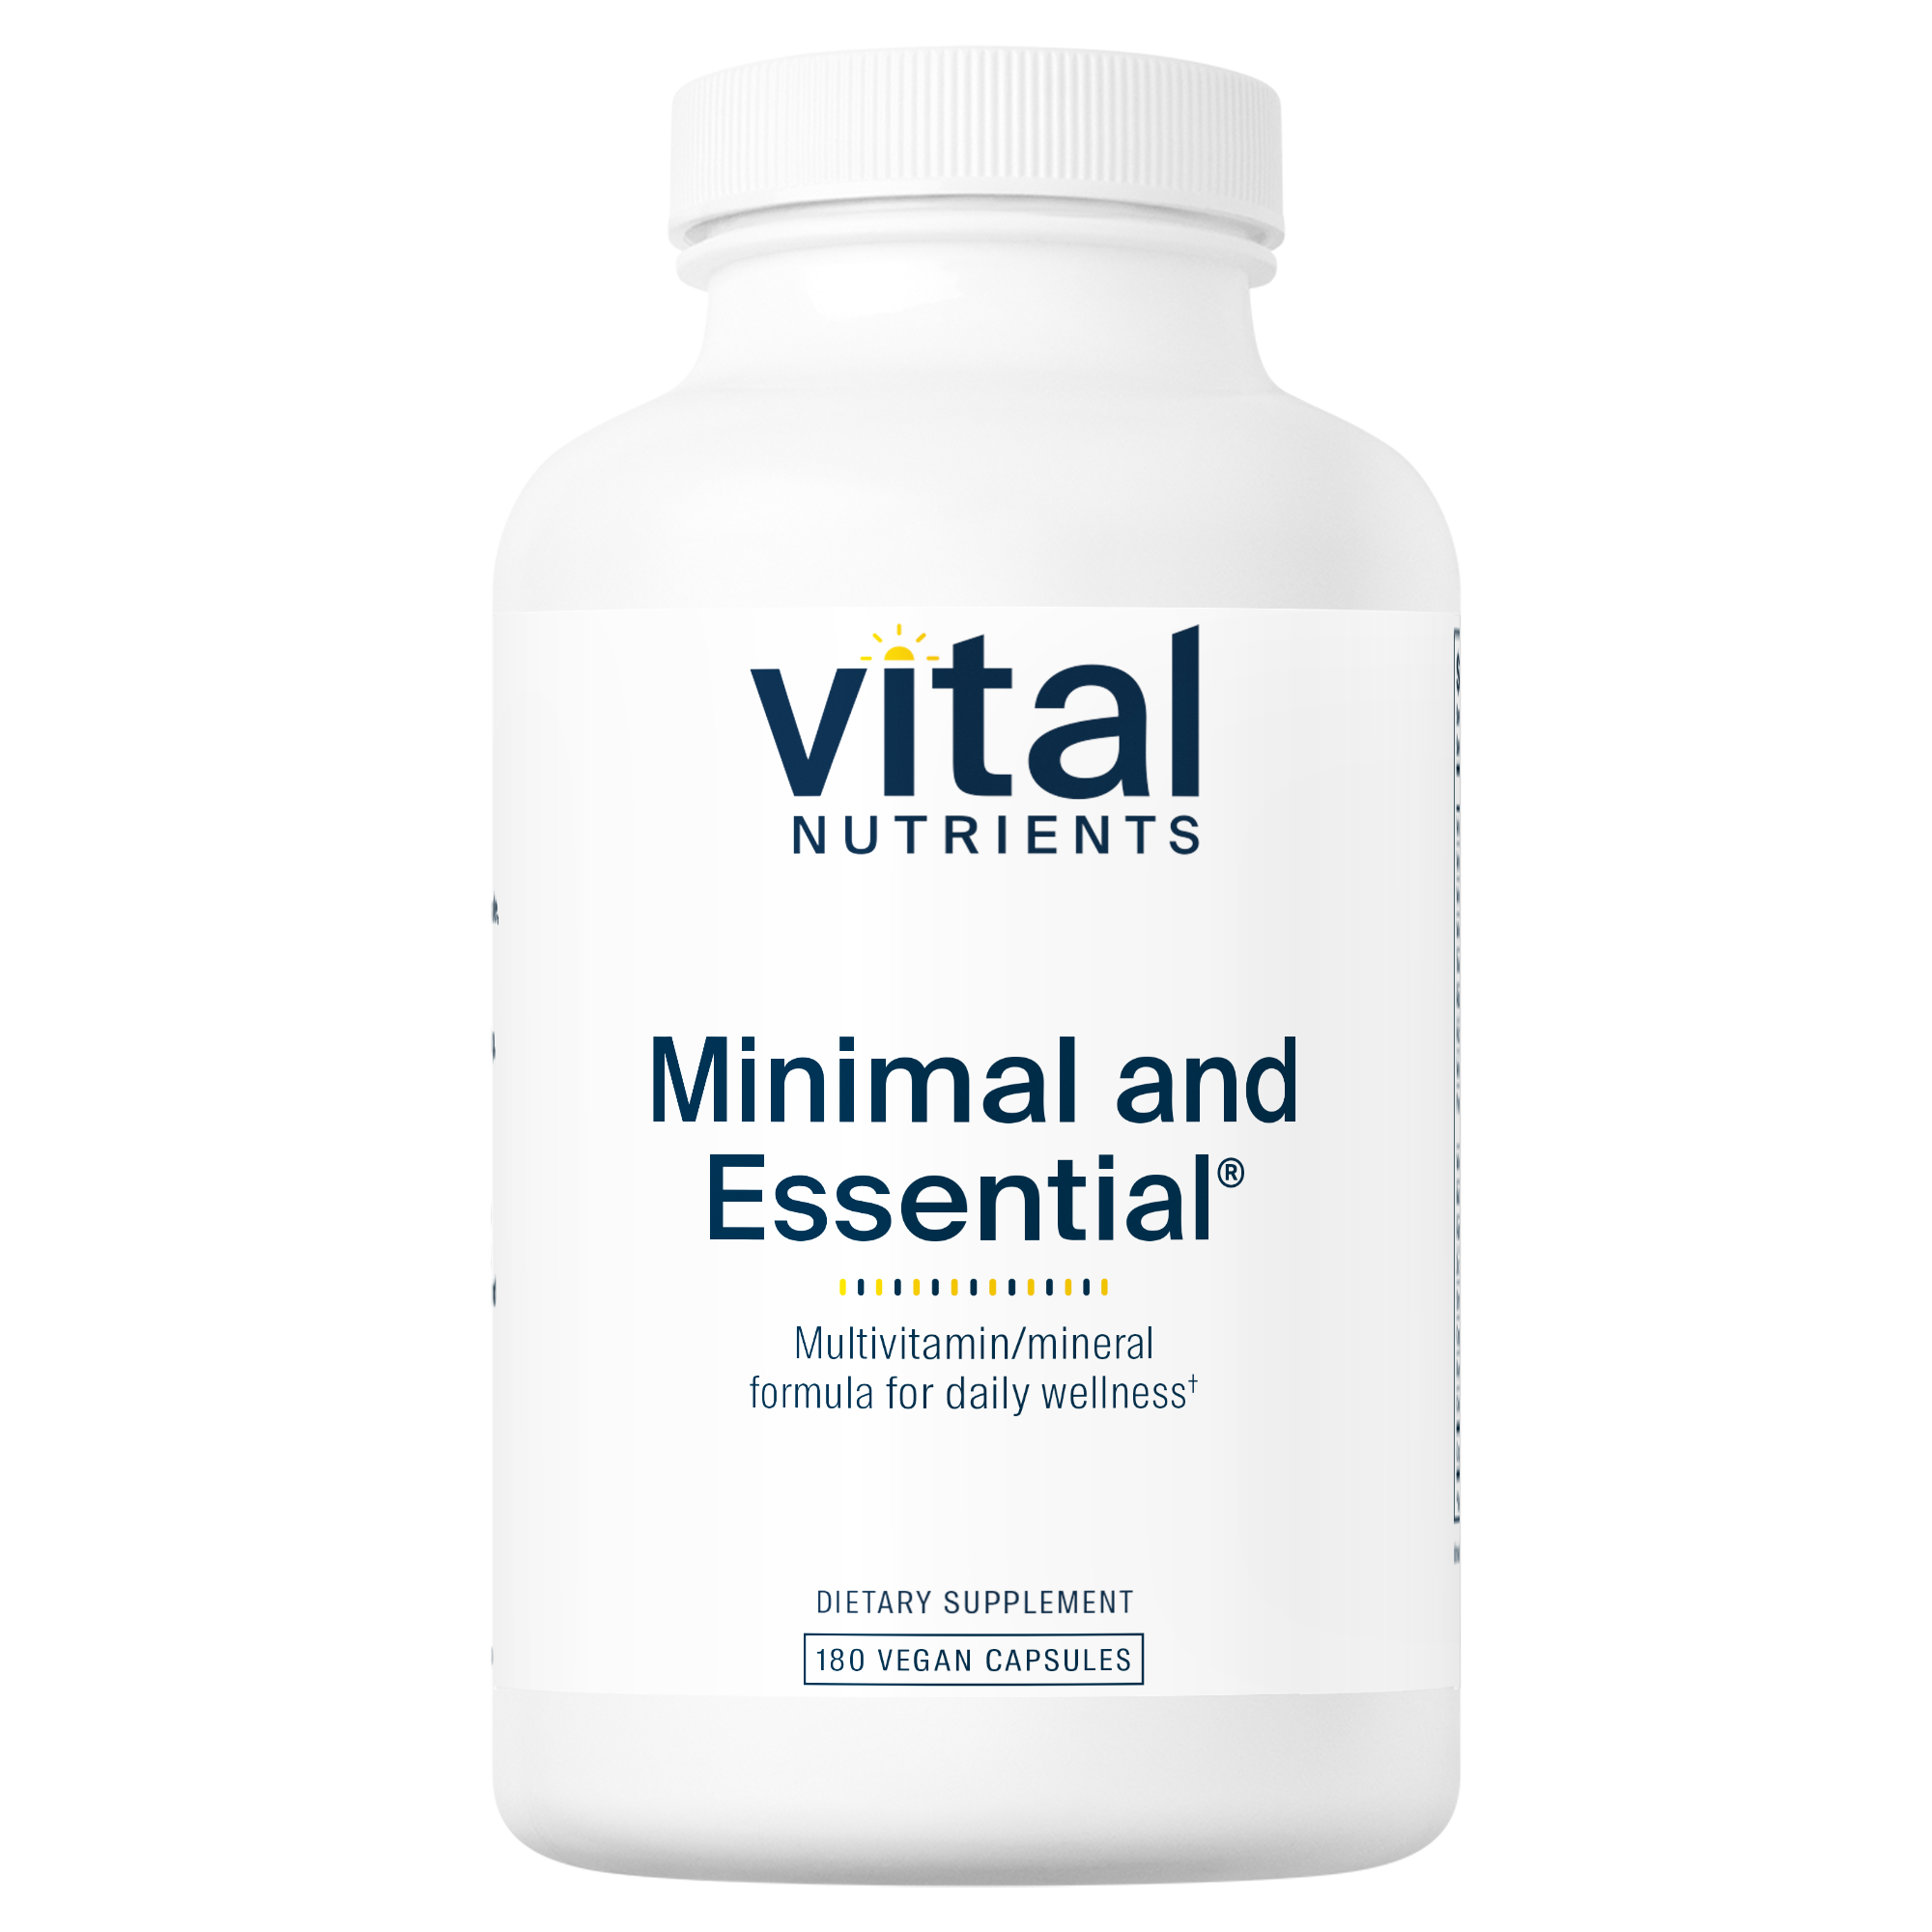 Minimal and Essential® ANTIOXIDANT AND MULTI-VITAMIN FORMULA